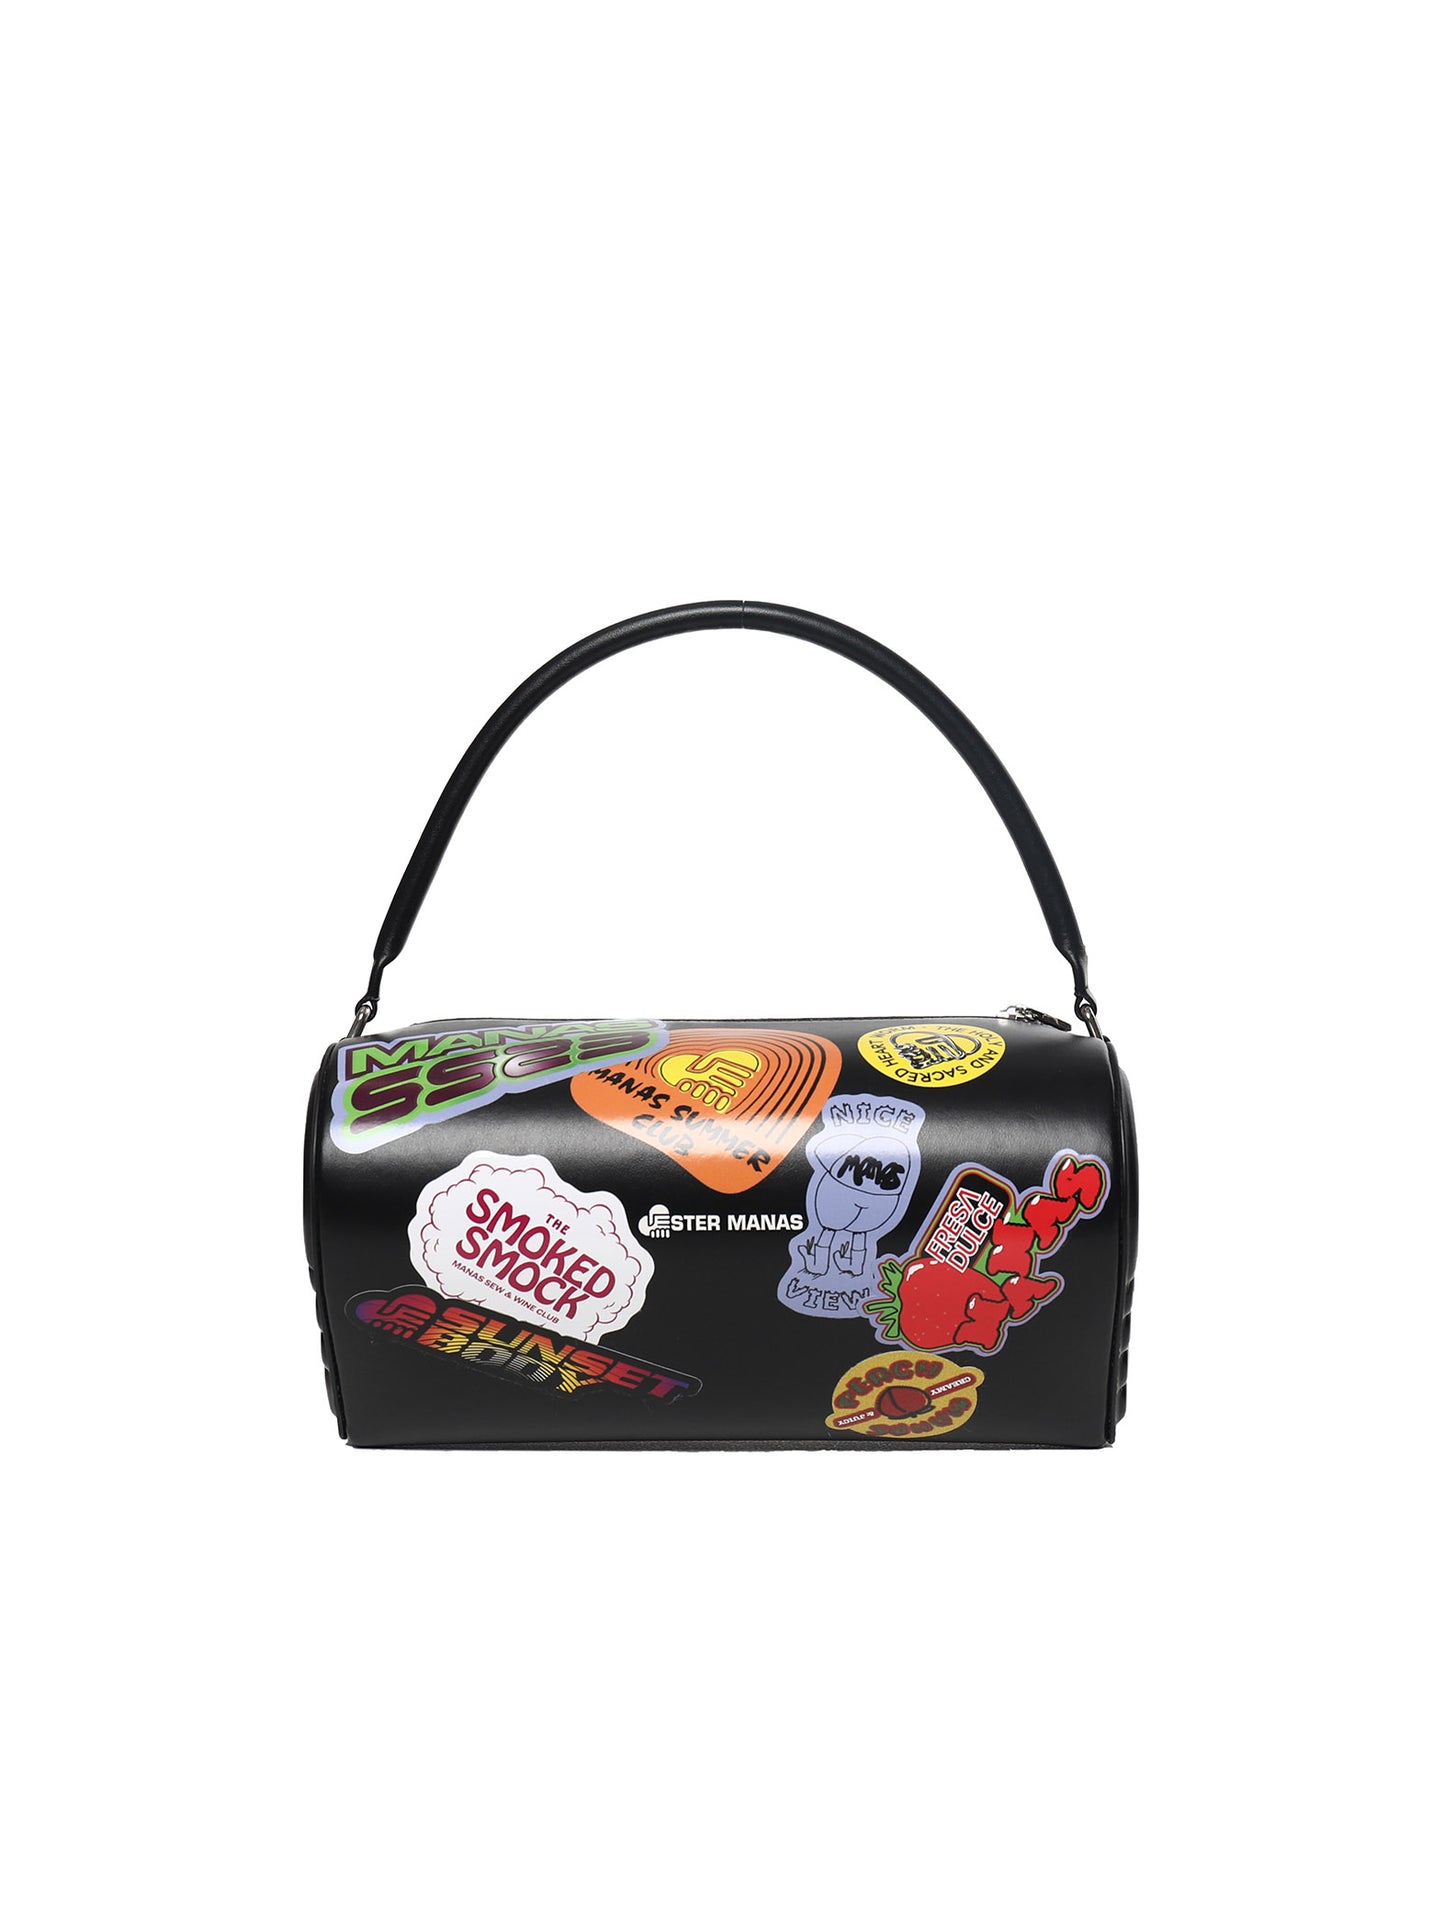 Ester Manas Summer Trip Baguette Bag